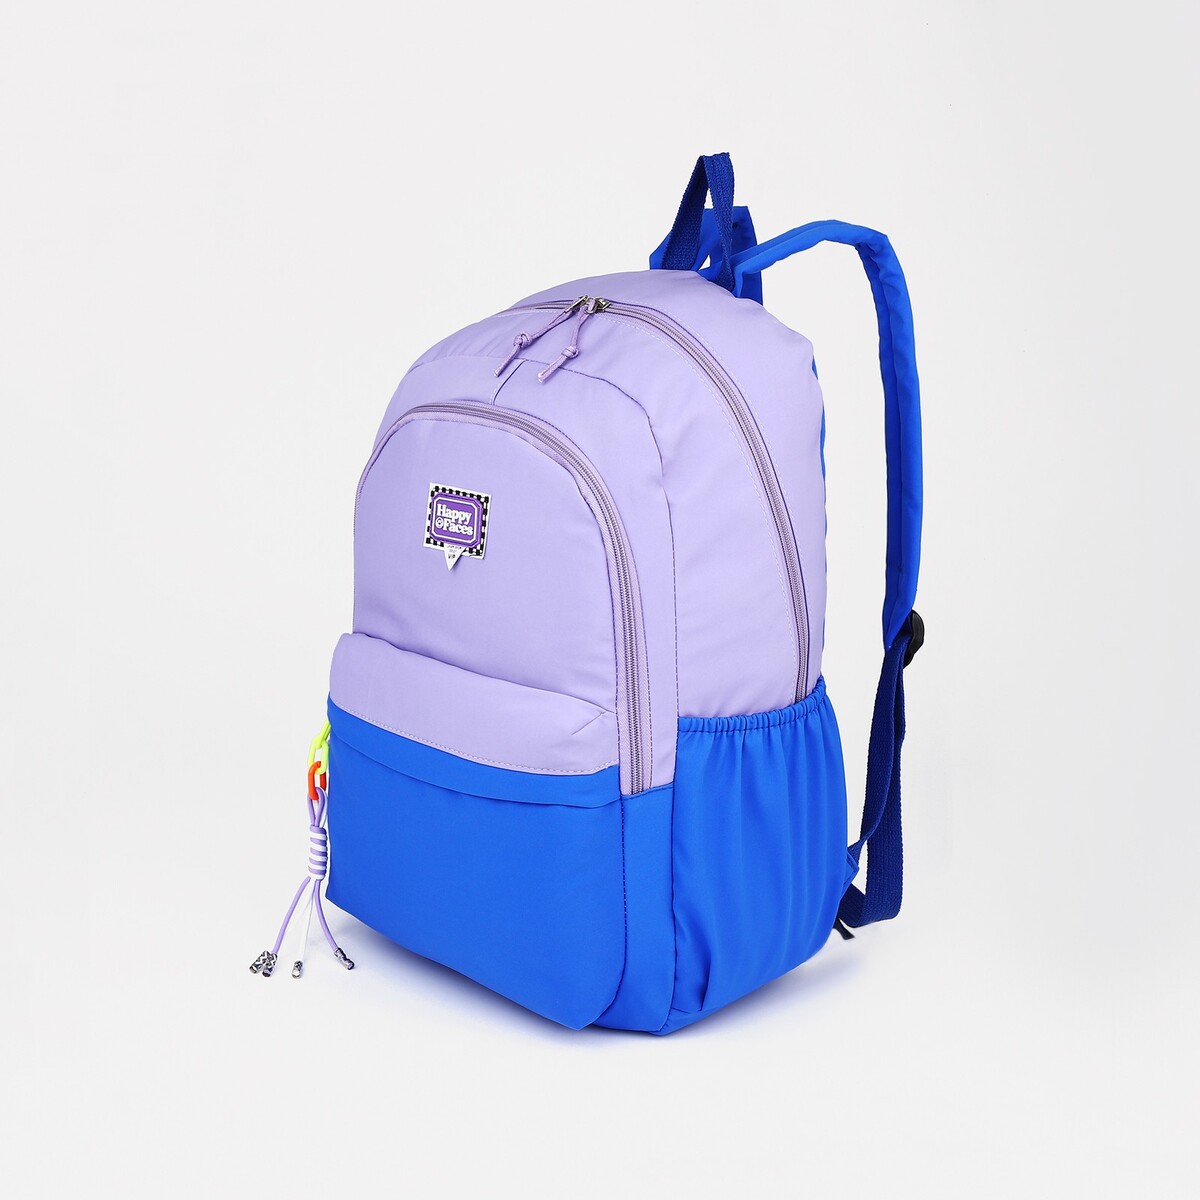 Рюкзак на молнии, 4 наружных кармана, цвет сиреневый/синий